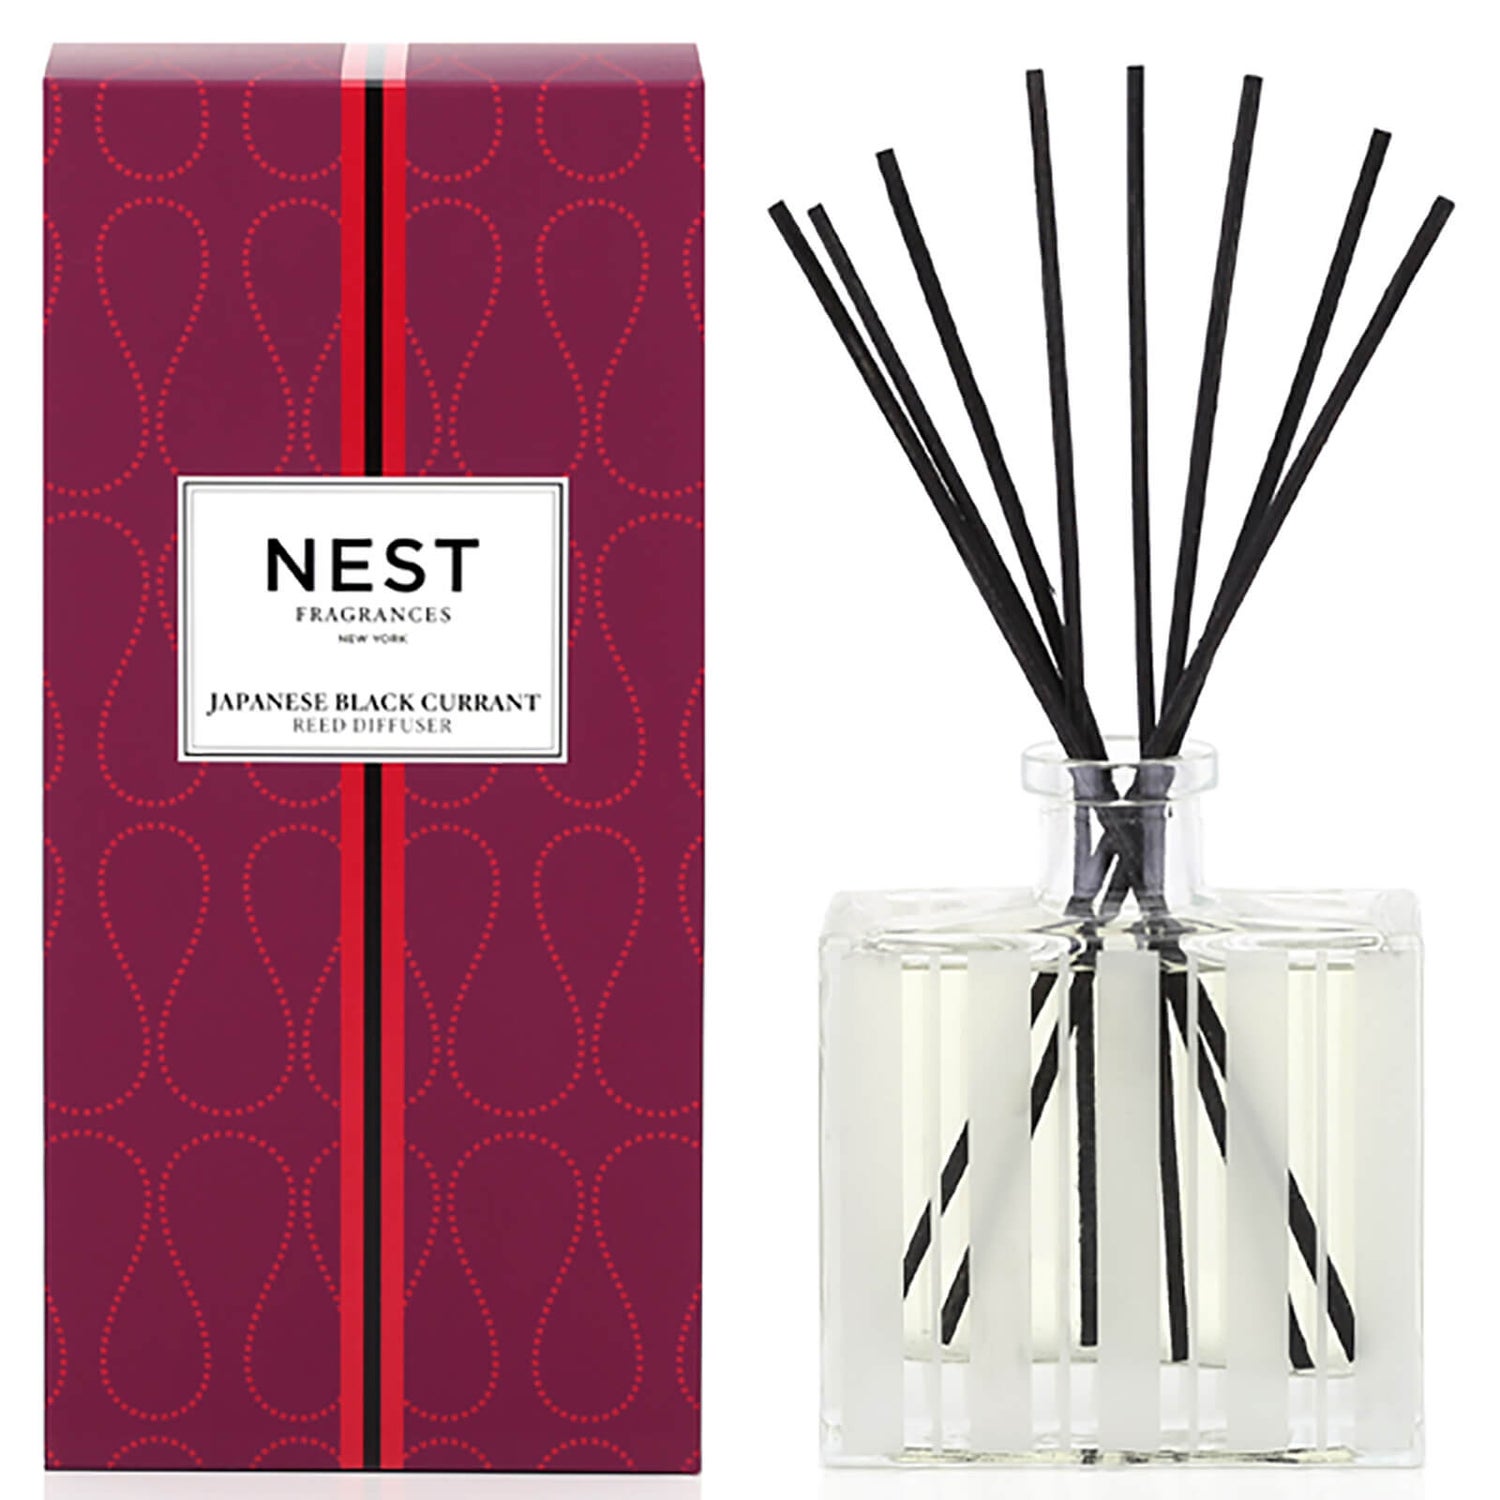 NEST Fragrances Japanese Black Currant Reed Diffuser